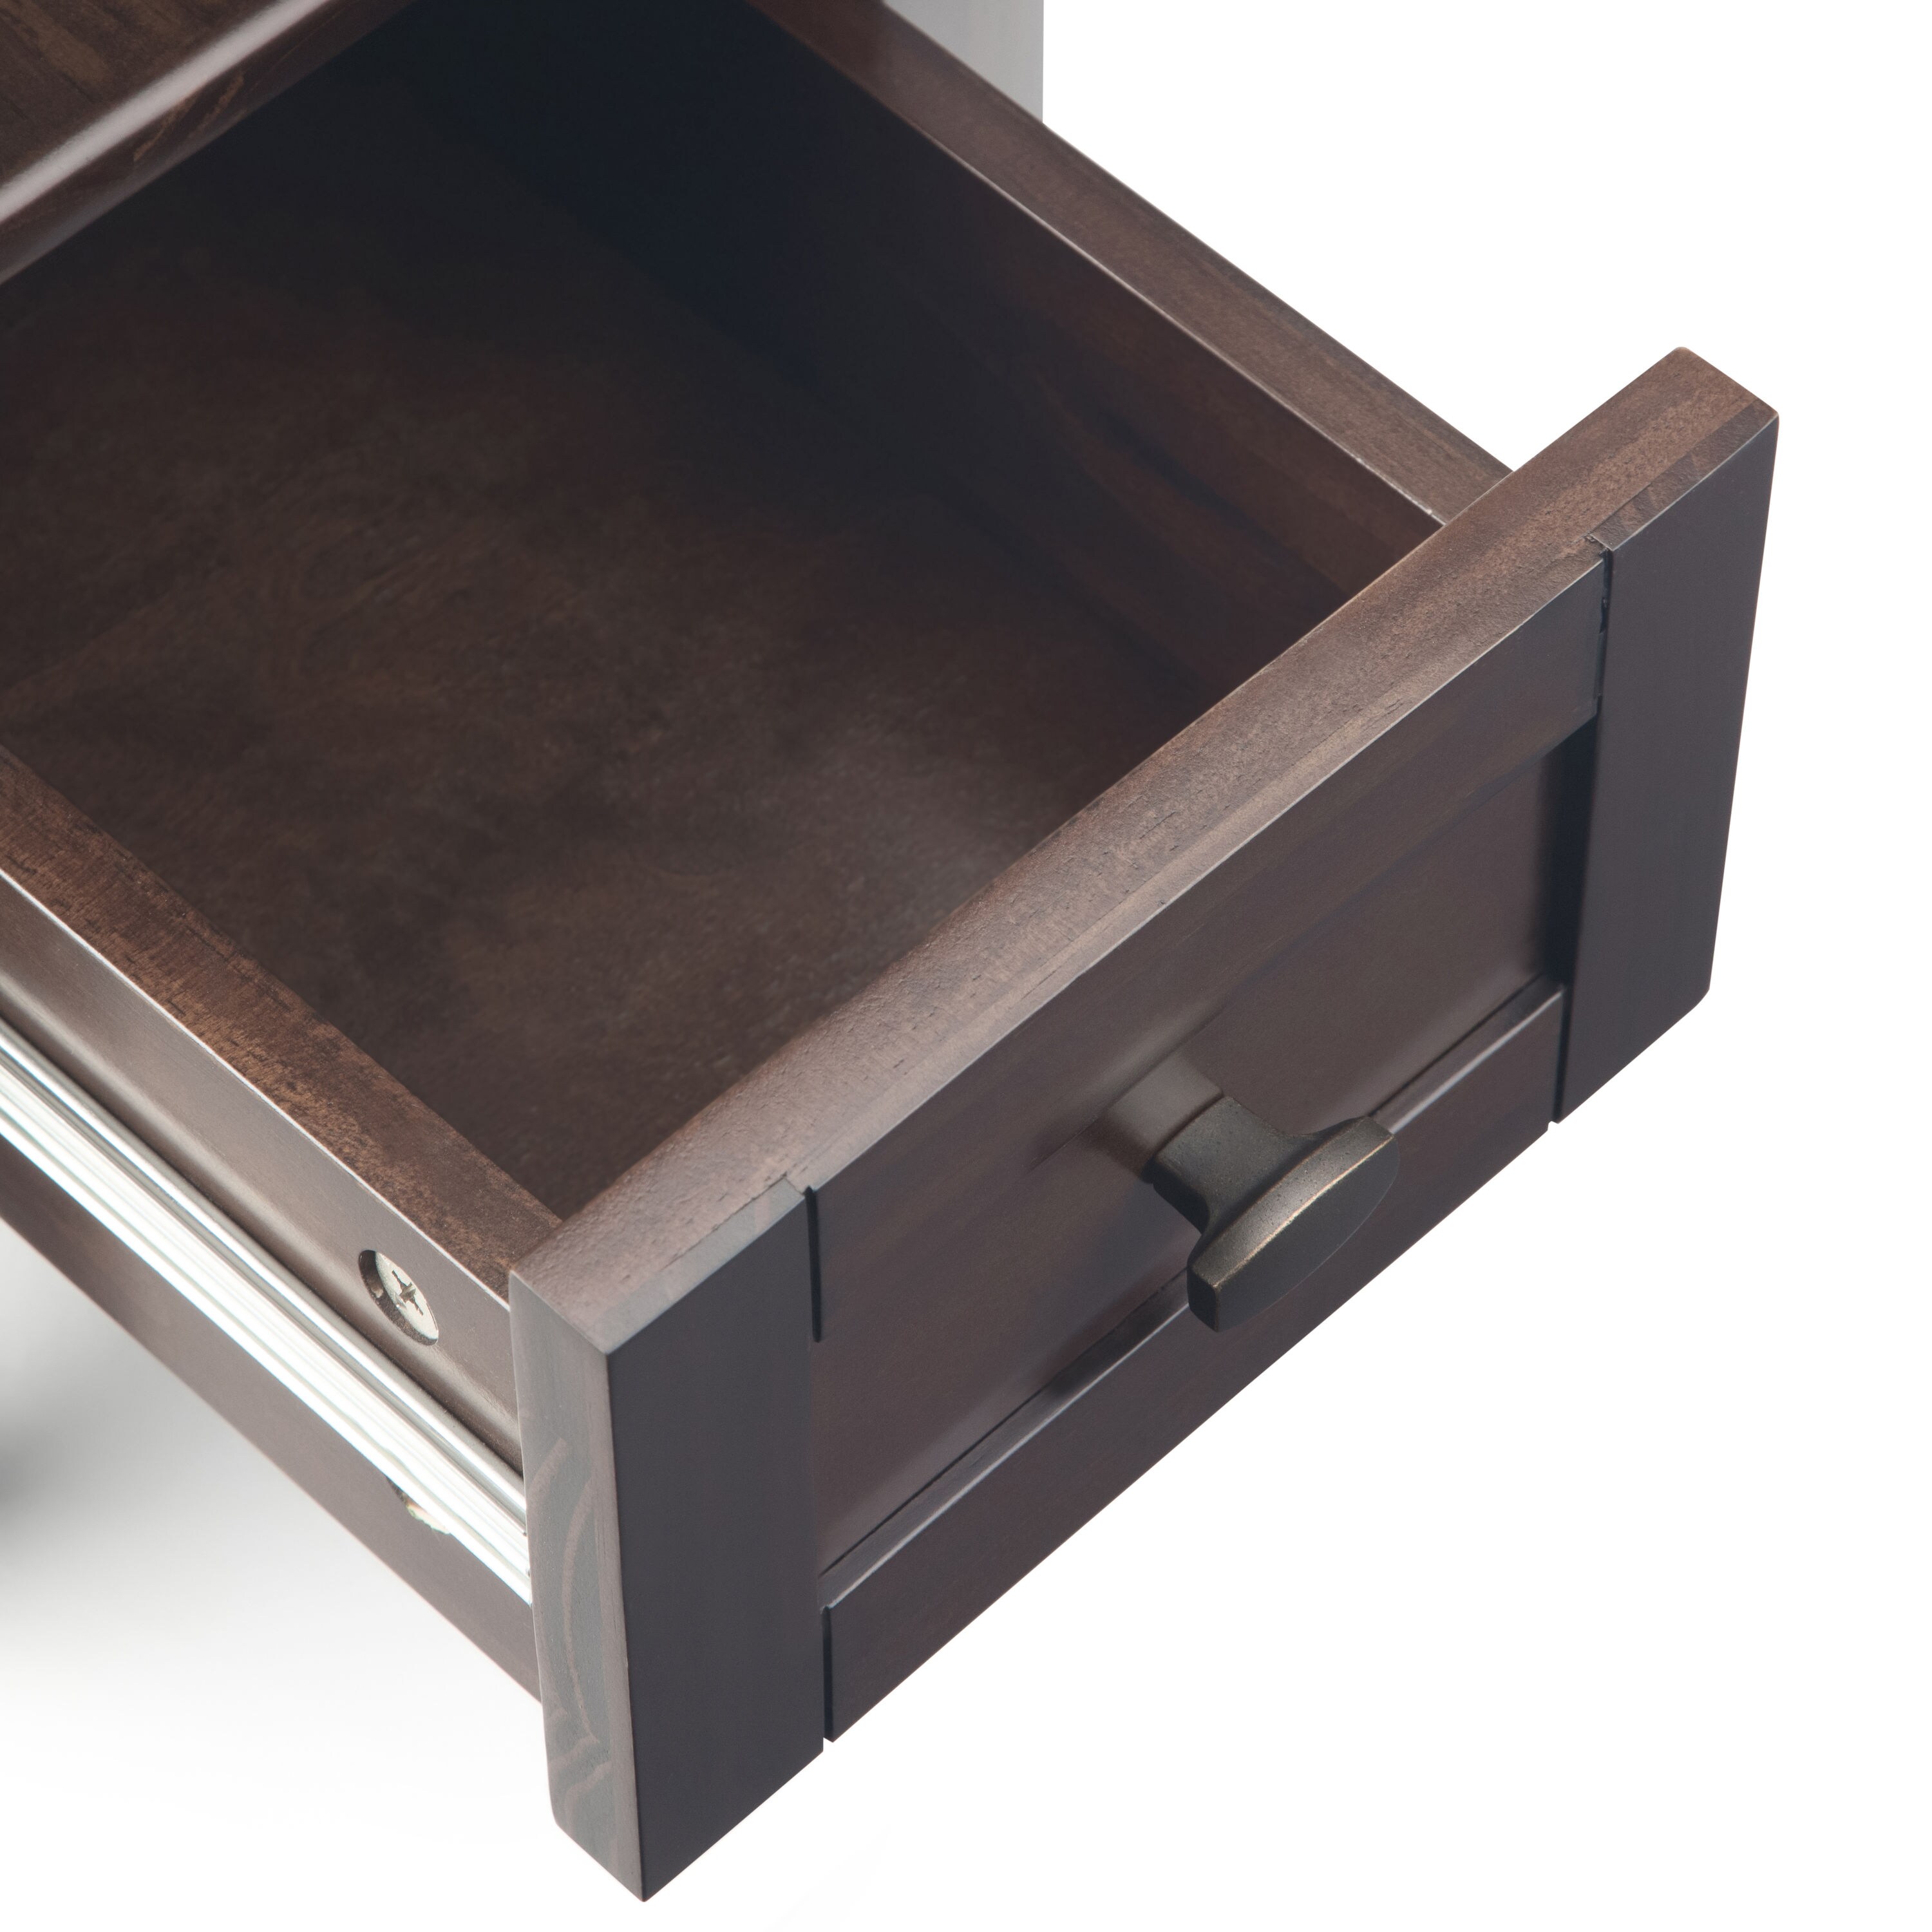 Simpli Home Warm Shaker Solid Wood Desk - Tobacco Brown